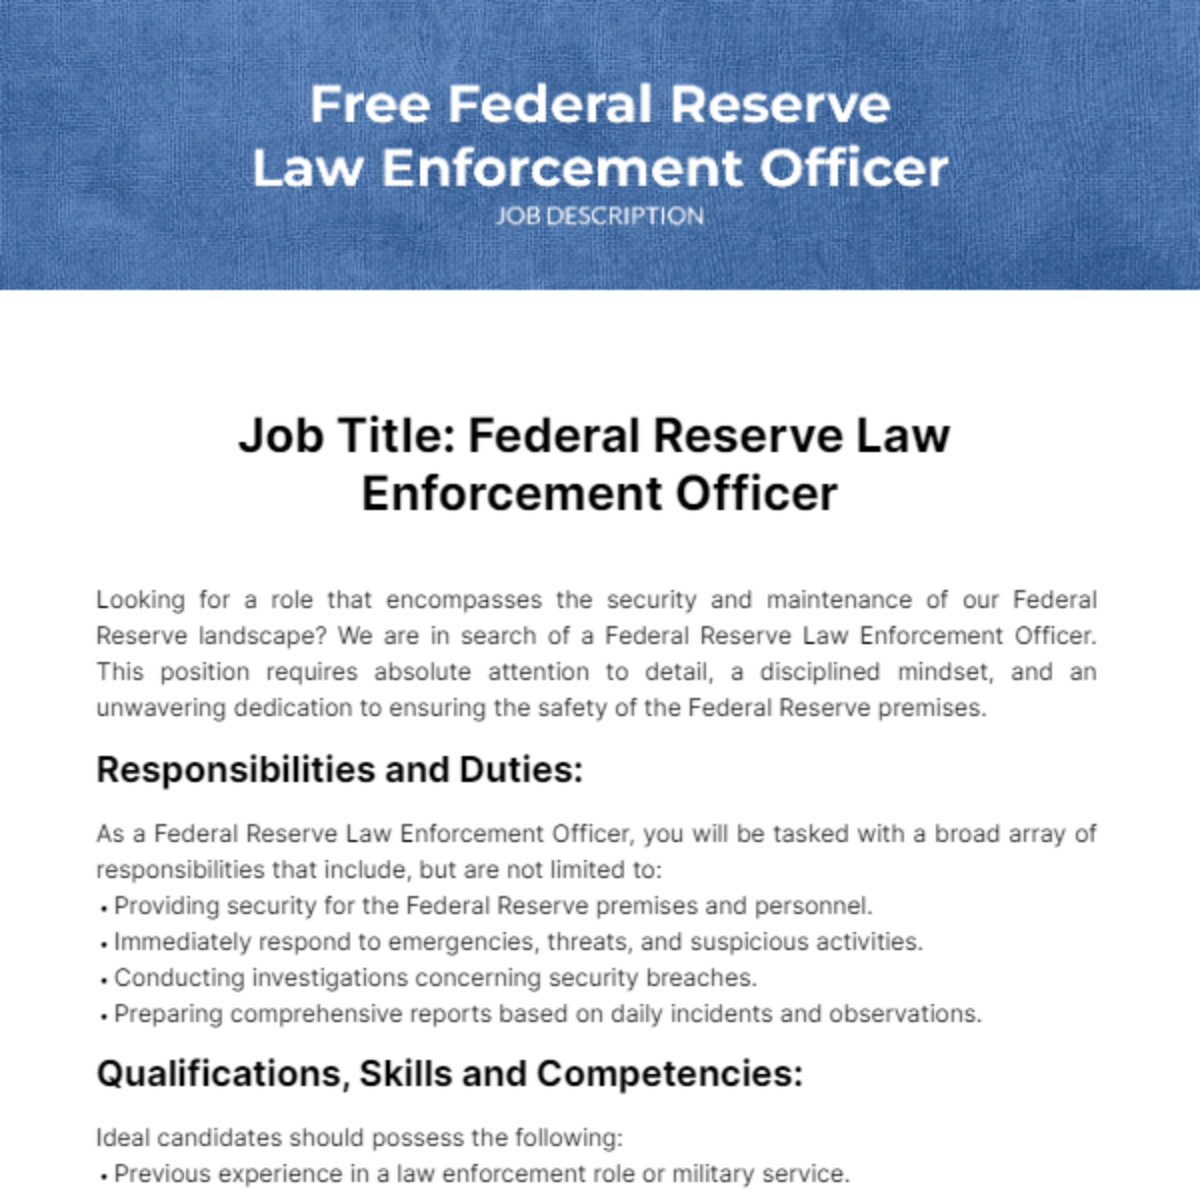 Free Federal Reserve Law Enforcement Officer Job Description Template